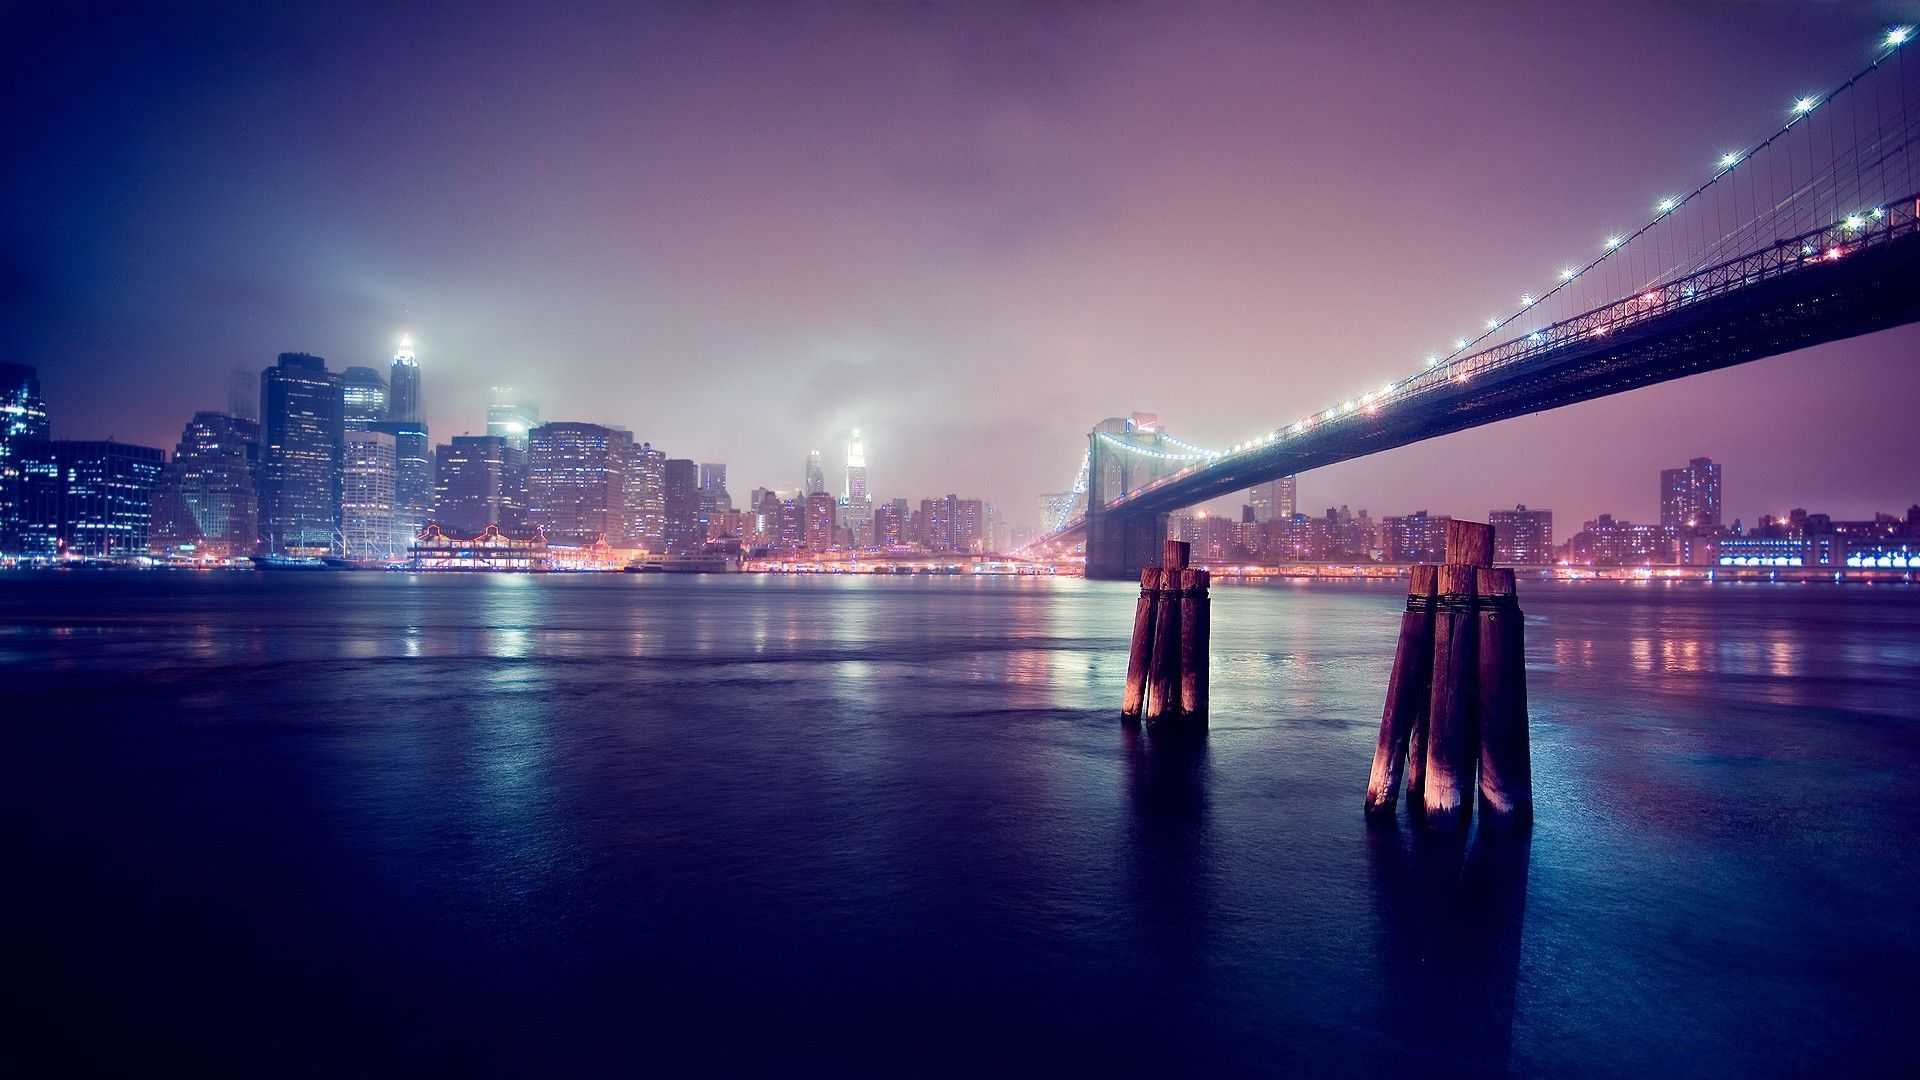 New York City, #bridge, #city, #night, #skyline, #Manhattan, #clouds, #river, #building, #USA, #skyscraper, #cityscape, #Brooklyn Bridge, #lights, #digital art. Bridge wallpaper, City wallpaper, Urban landscape